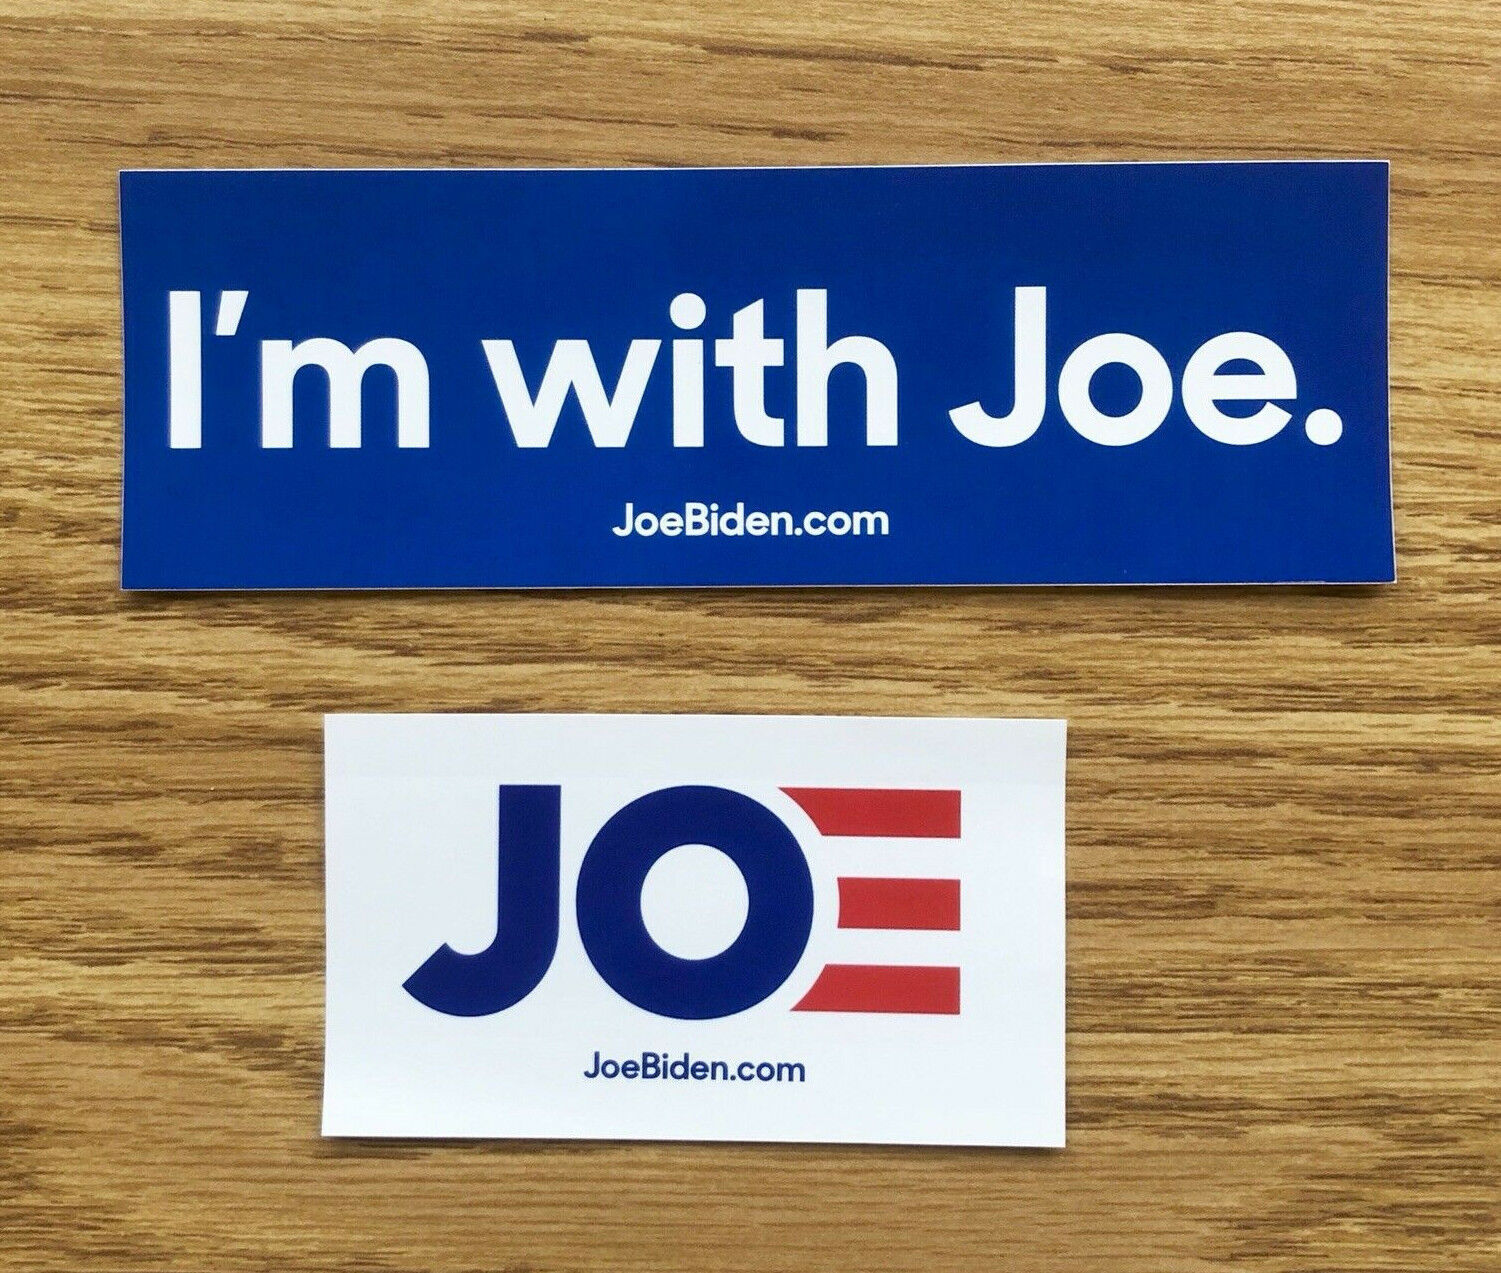 Joe Biden for President 2020 Campaign Bumper Sticker Pack